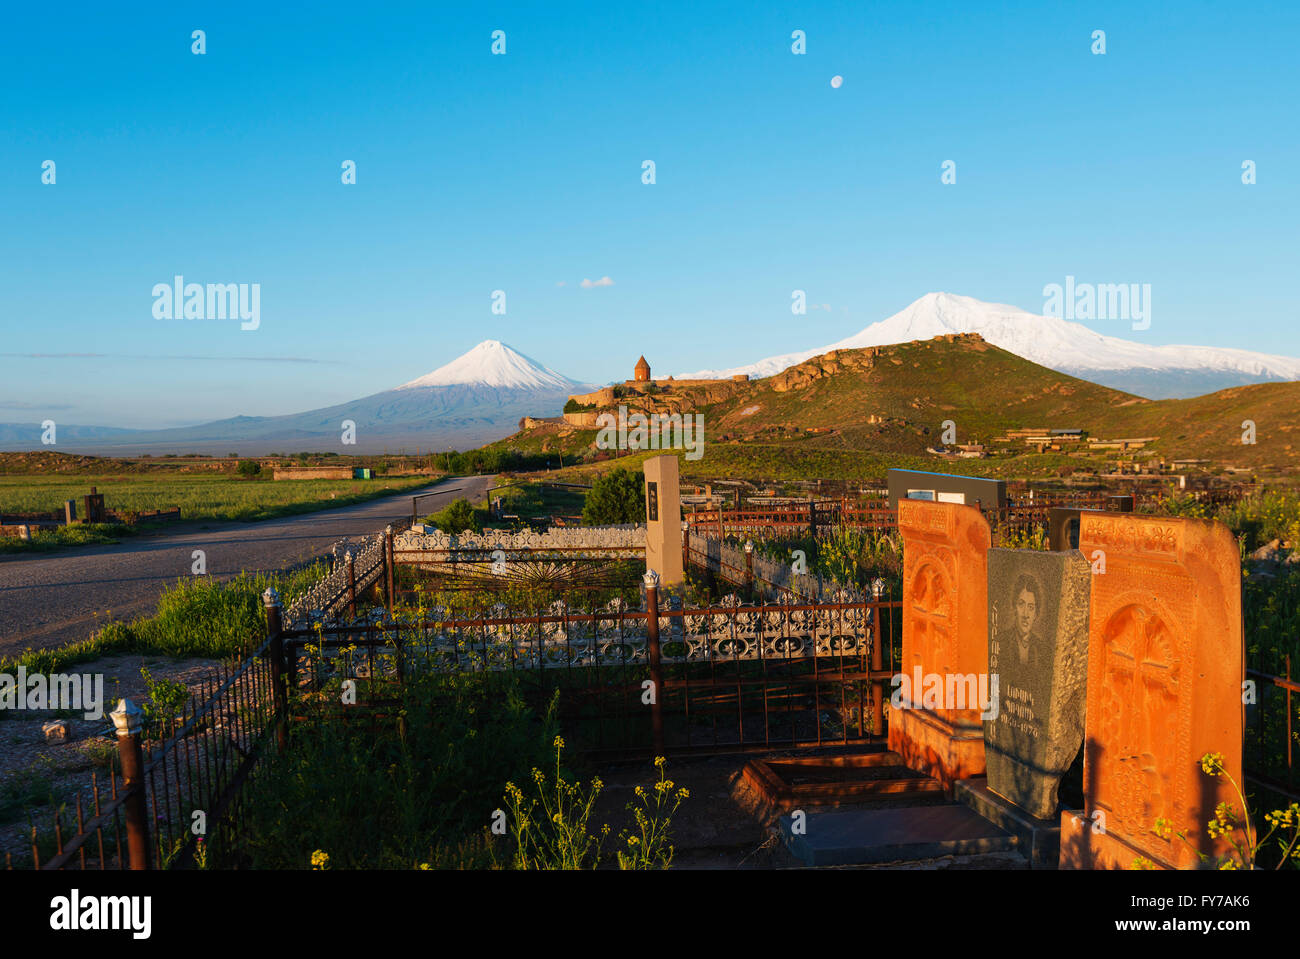 Eurasien, Kaukasus, Armenien, Kloster Khor Virap, Berg Ararat (5137m) höchster Berg in der Türkei aus Armen fotografiert Stockfoto